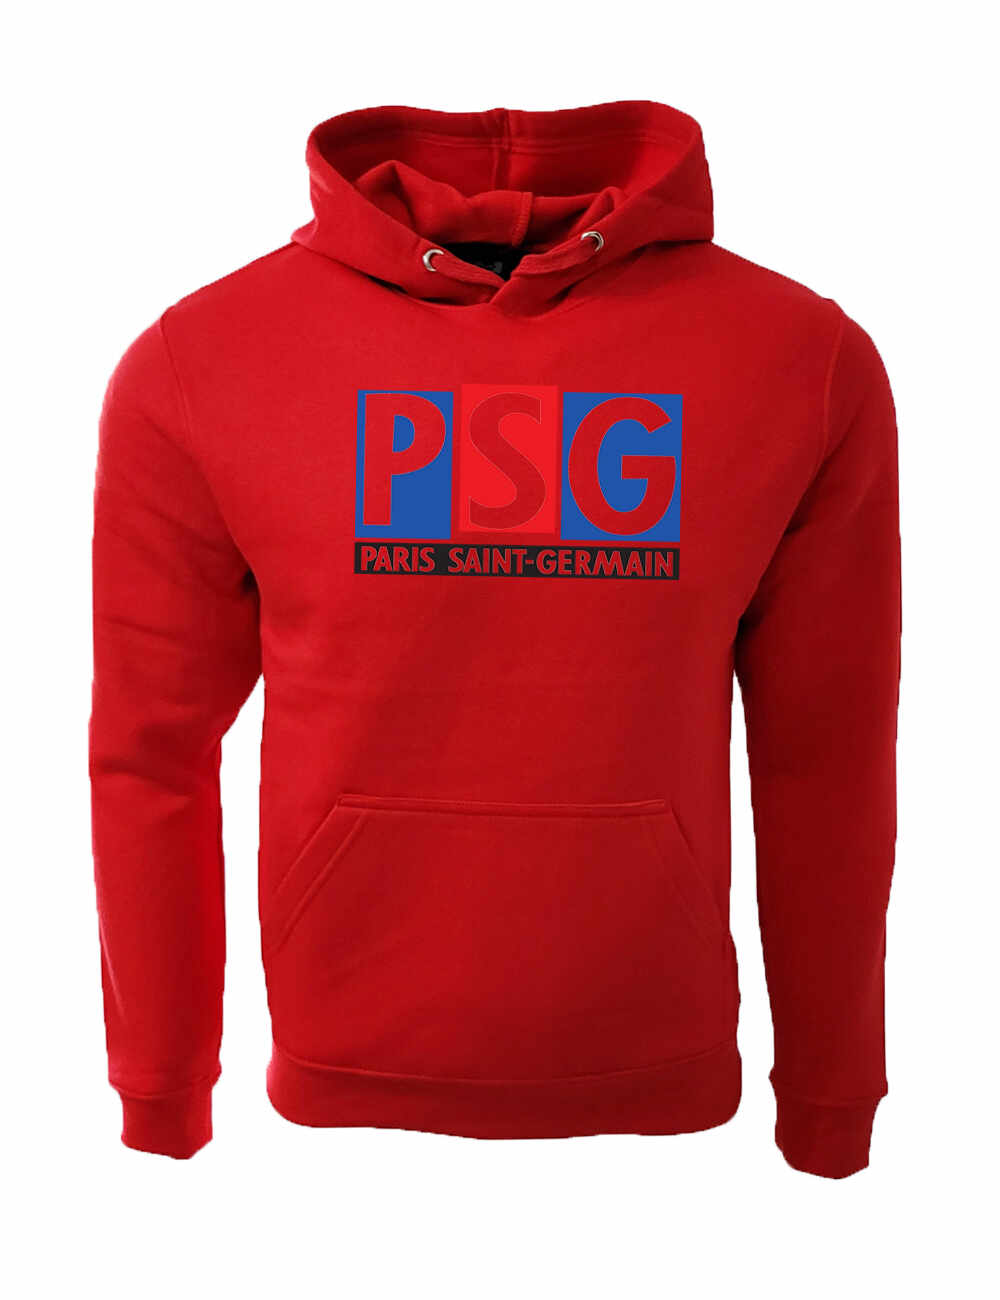 Hanorac PSG1 rosu -